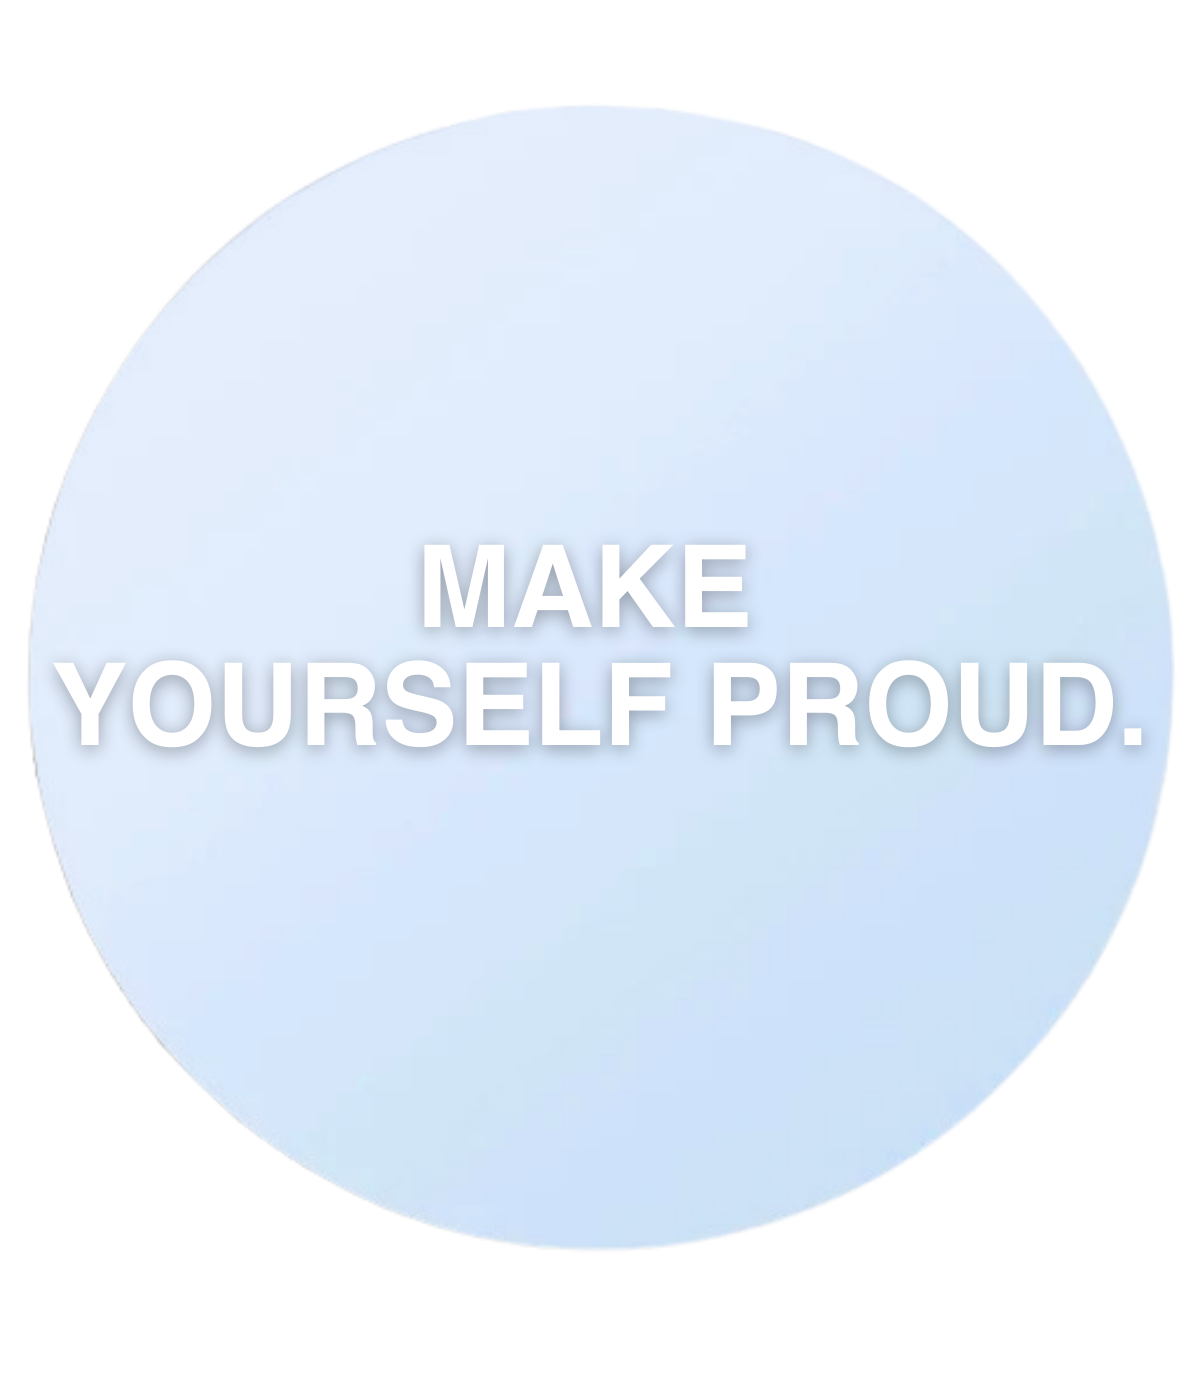 Make Yourself Proud Motivational Sticker